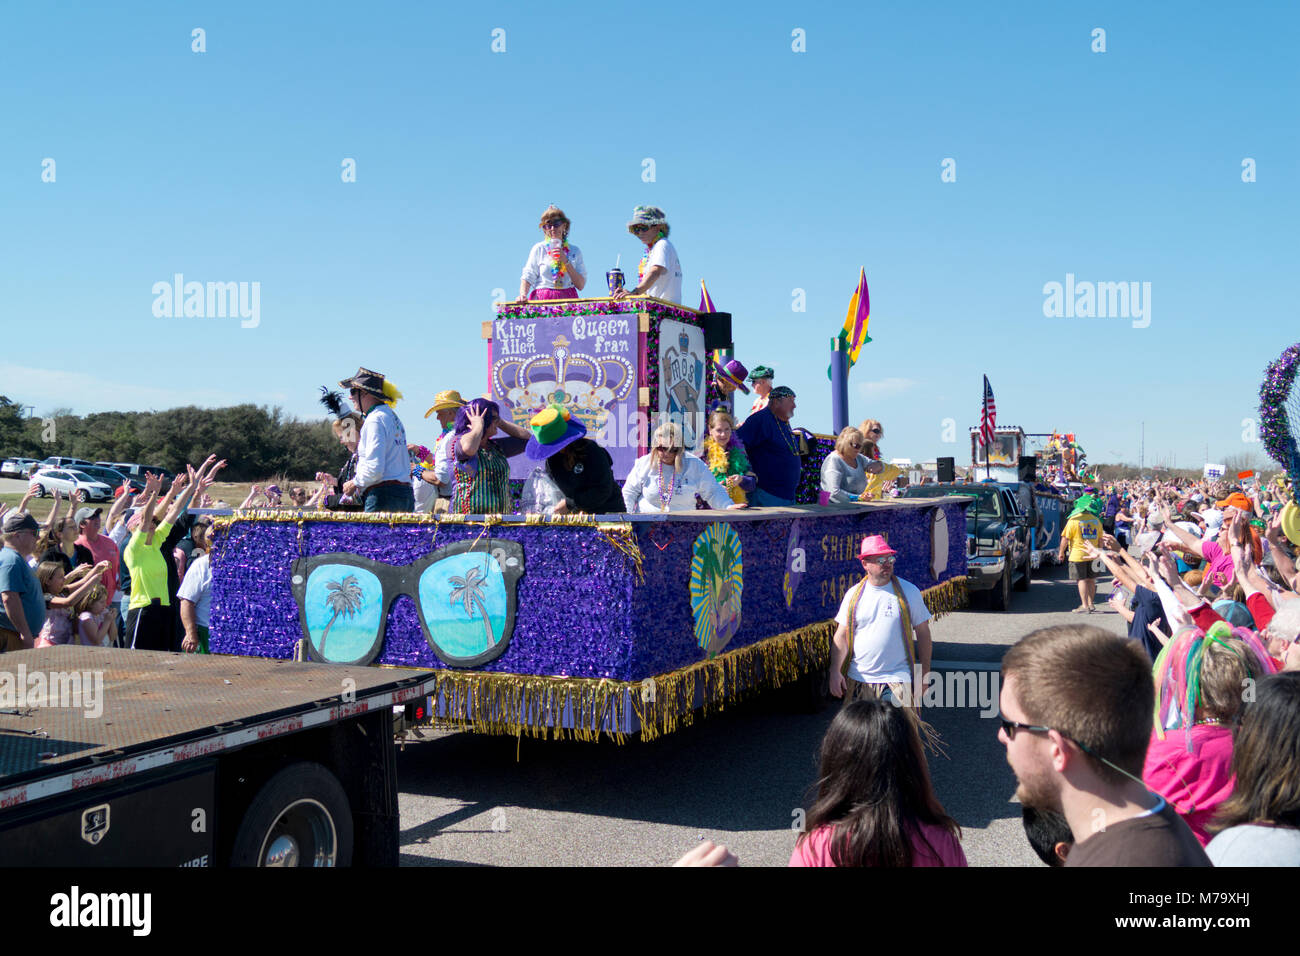 Shriner's float in 2018 Mardi Gras Parade at Gulf Shores, Alabama. Stock Photo